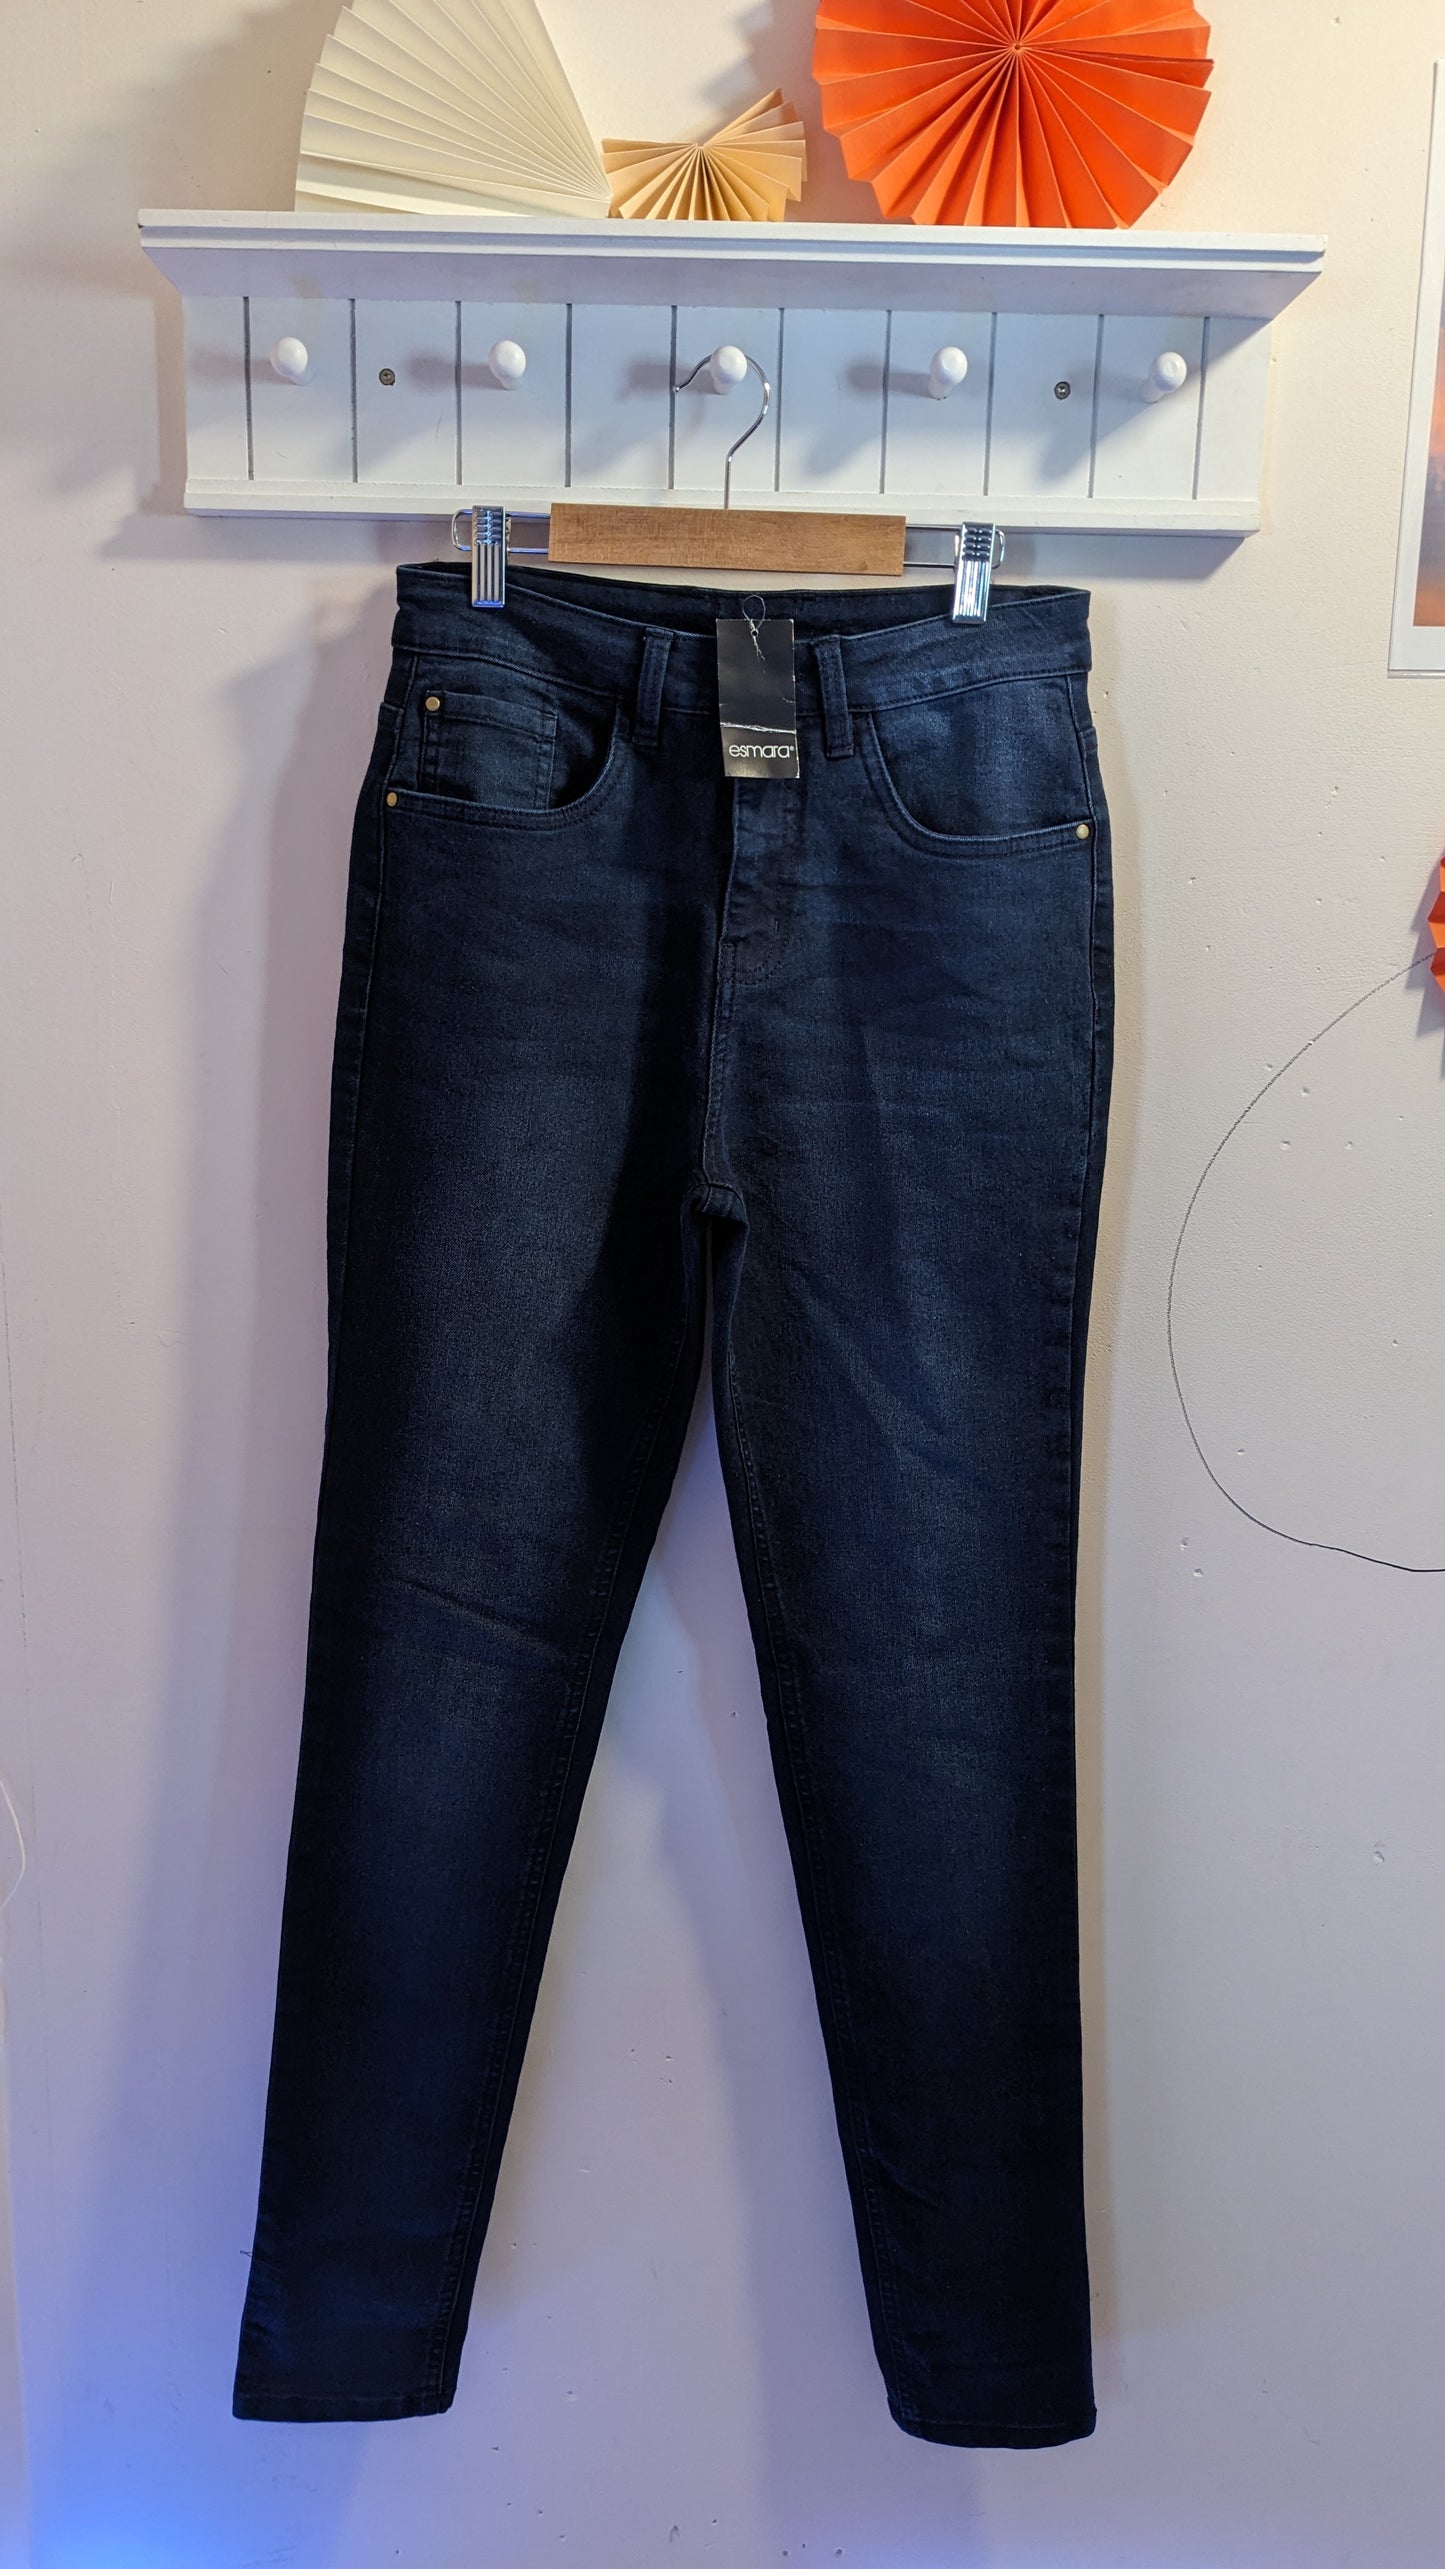 Neuf jeans slim brut - Esmara - 38